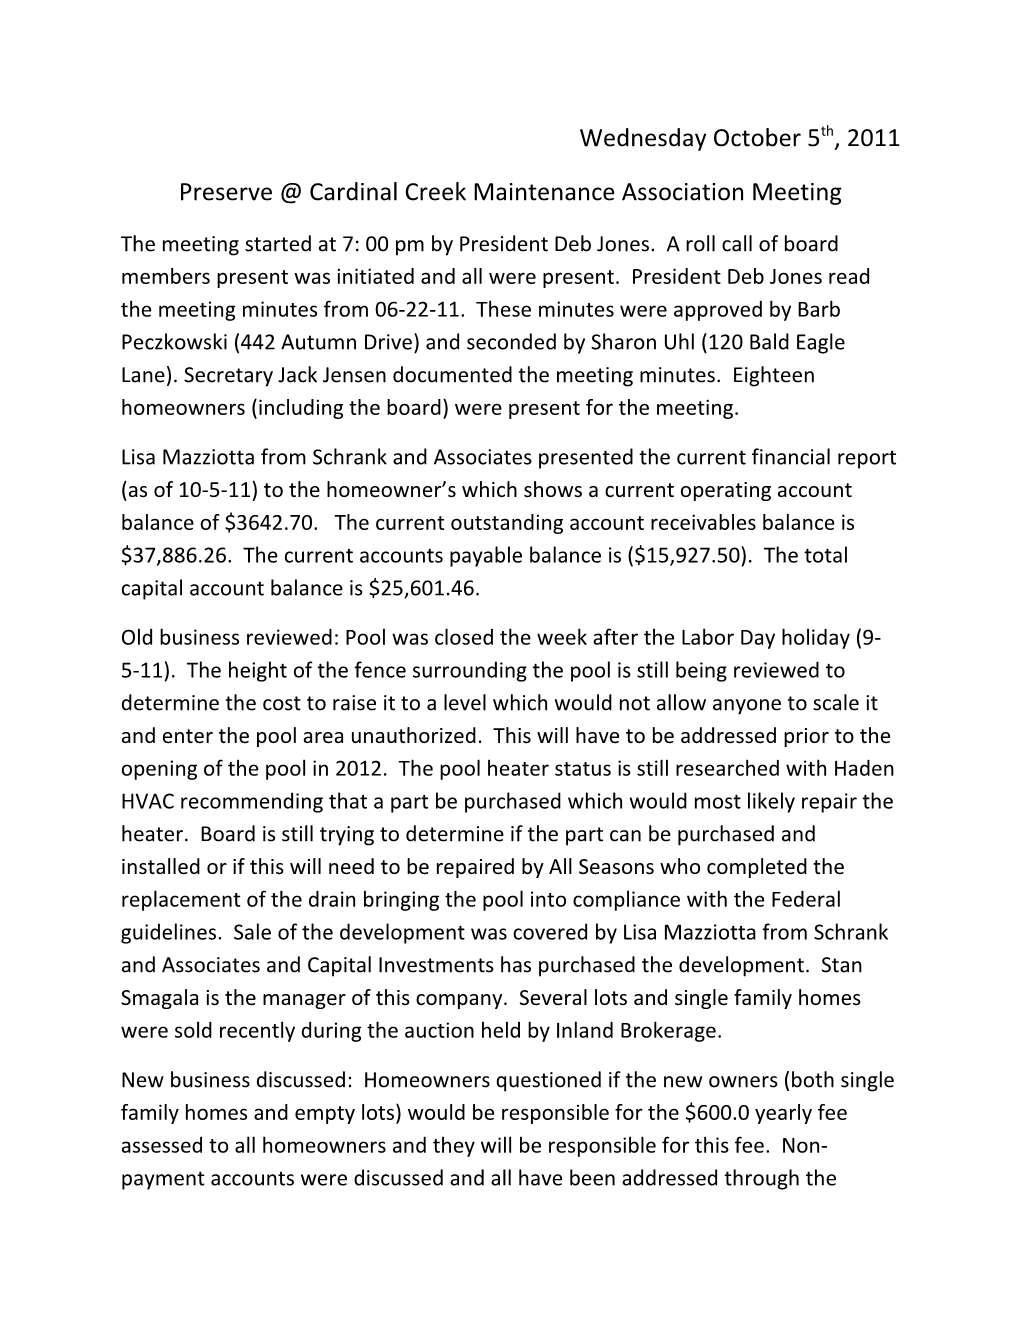 Preserve Cardinal Creek Maintenance Association Meeting